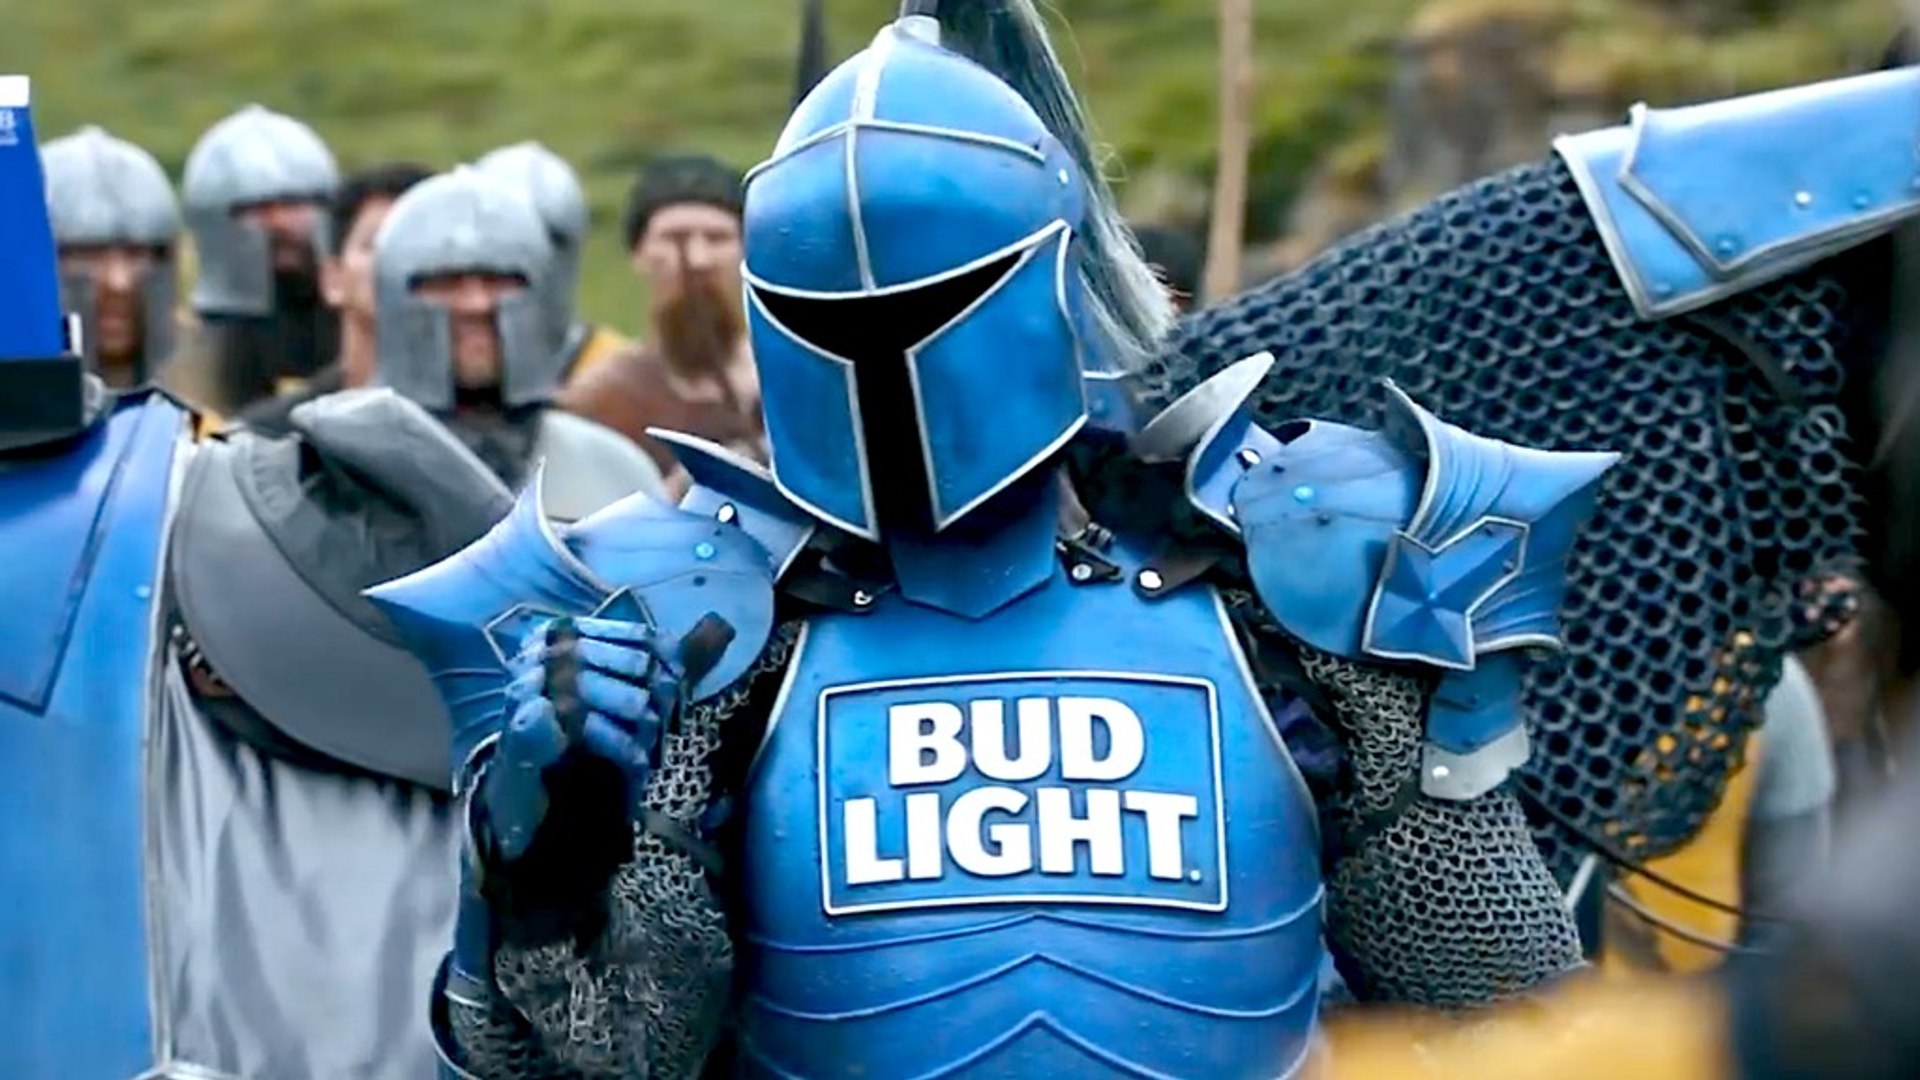 bud light knight